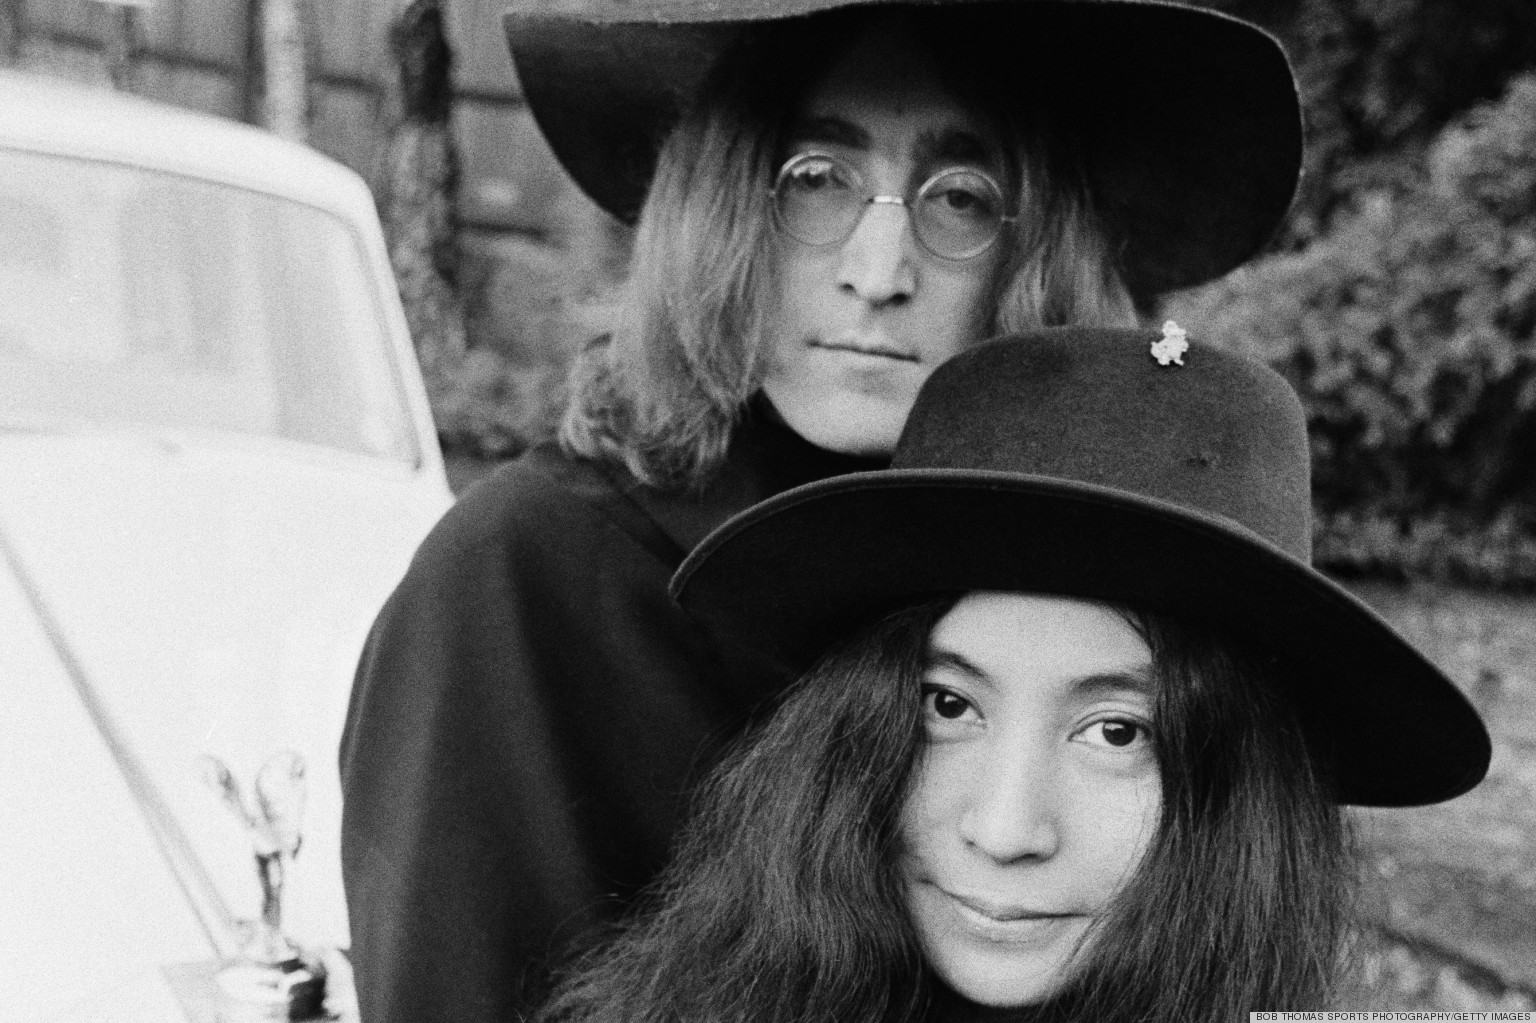 Yoko Ono and John Lennon at their home in England, December 1968.